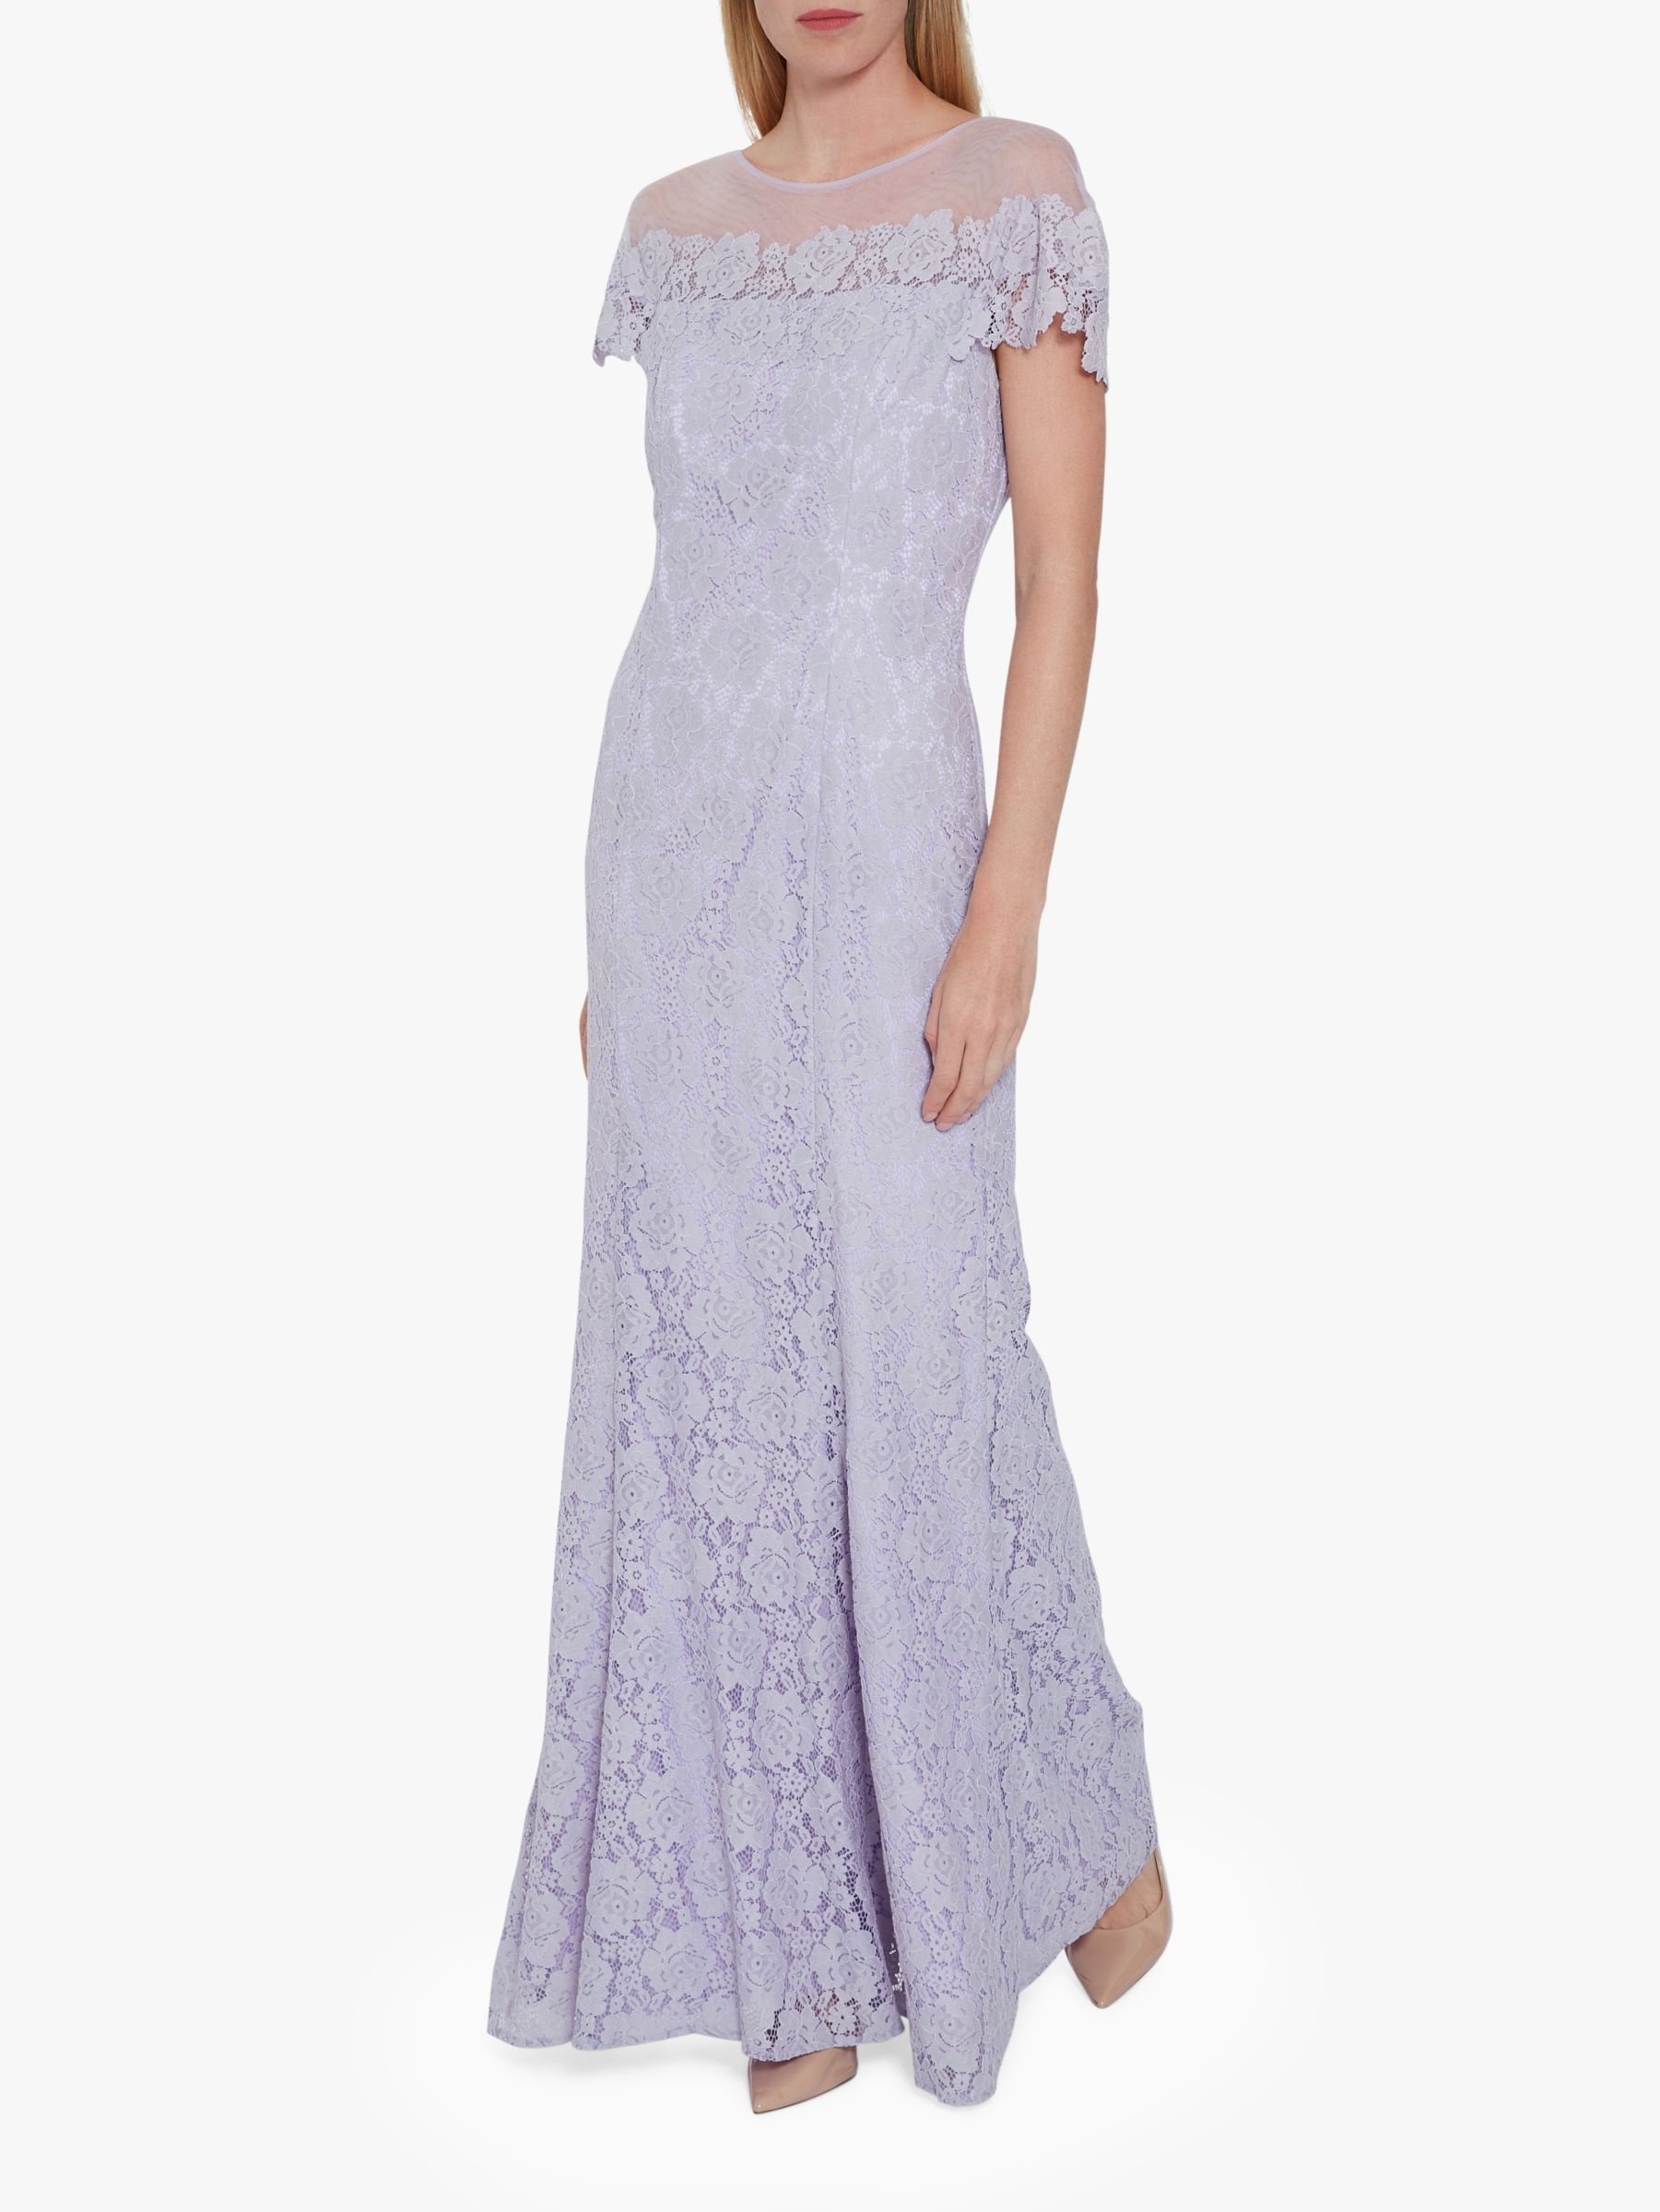 Gina Bacconi Oriole Embroidered Lace Maxi Dress, Lilac at John Lewis ...